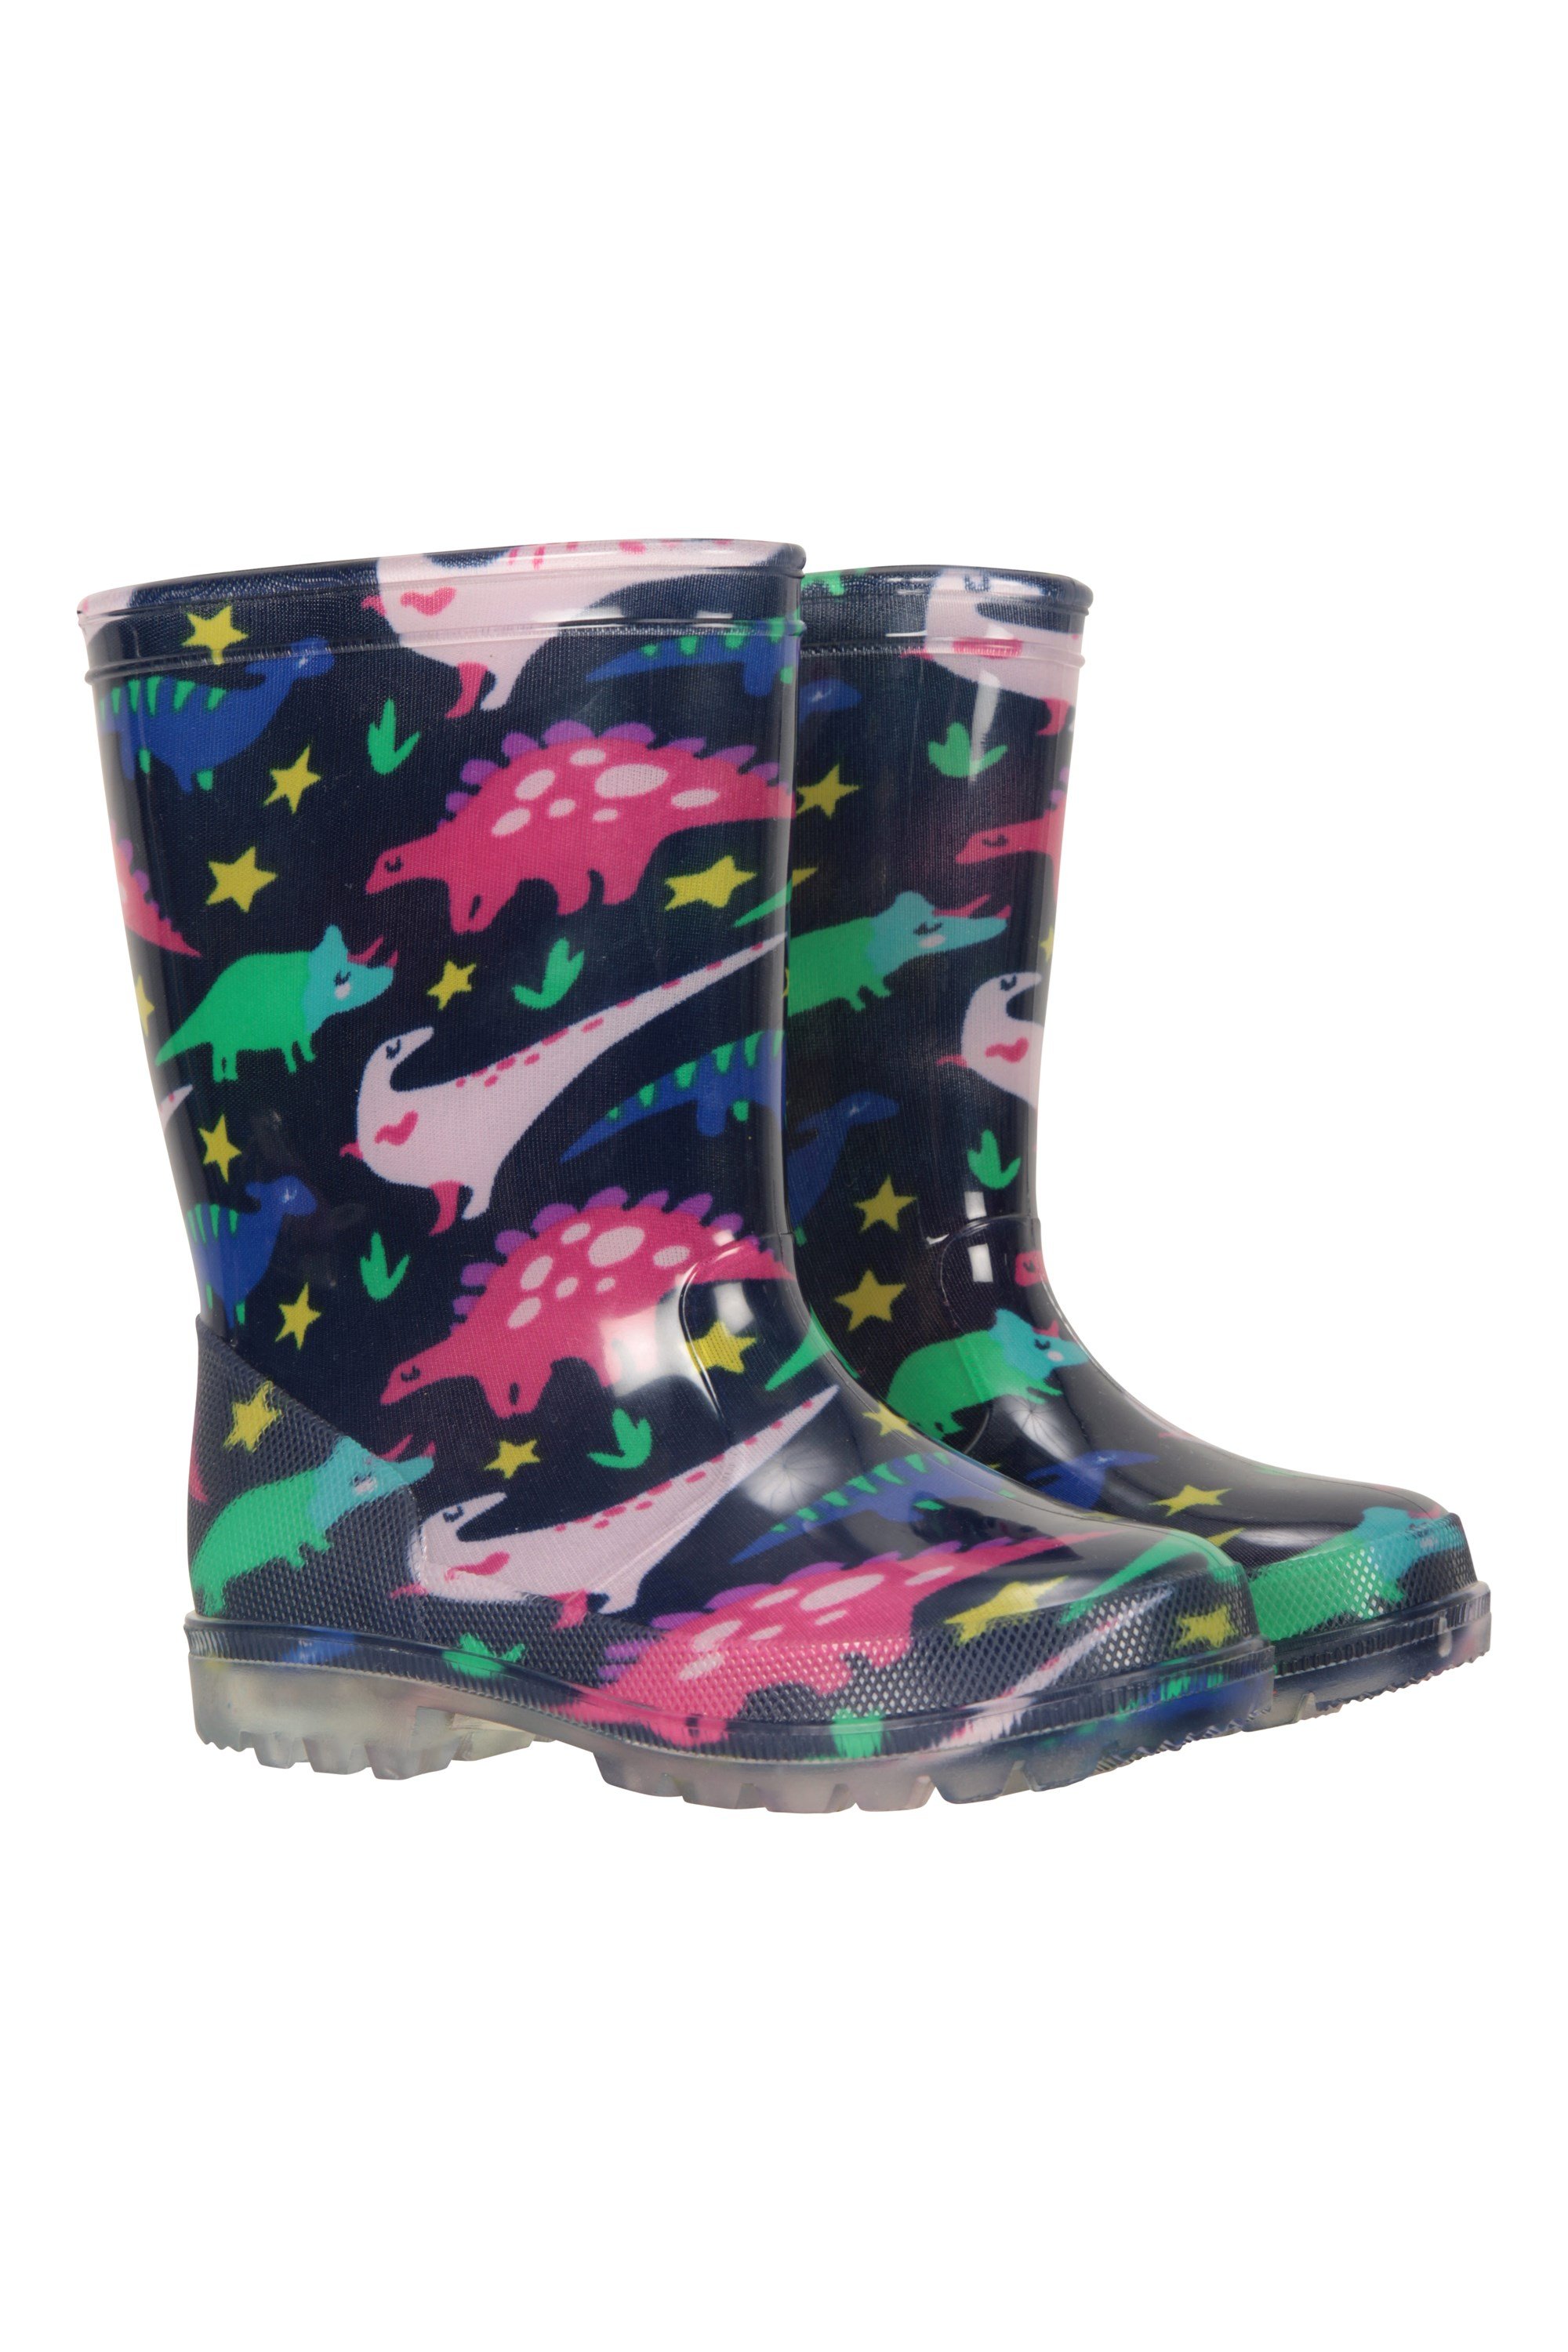 Mountain Warehouse Pattern Junior Rain Boots Cute Kids Wellies 